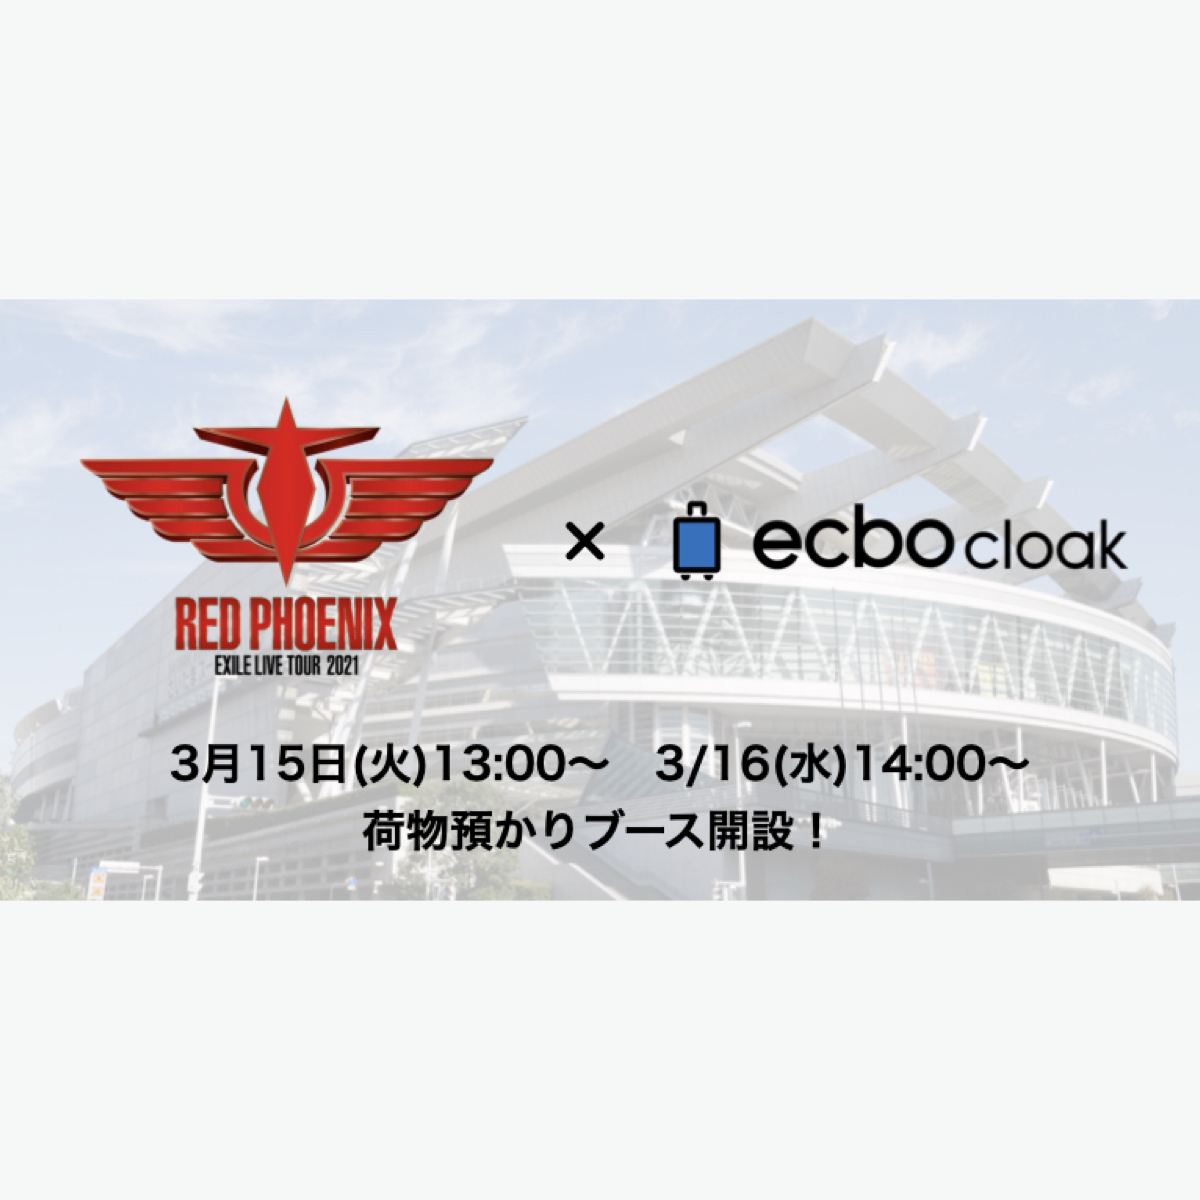 【3/15-3/16】EXILE LIVE TOUR 2021 “RED PHOENIX”さいたまスーパーアリーナ公演にて、ecbo cloakが荷物預かりを実施！